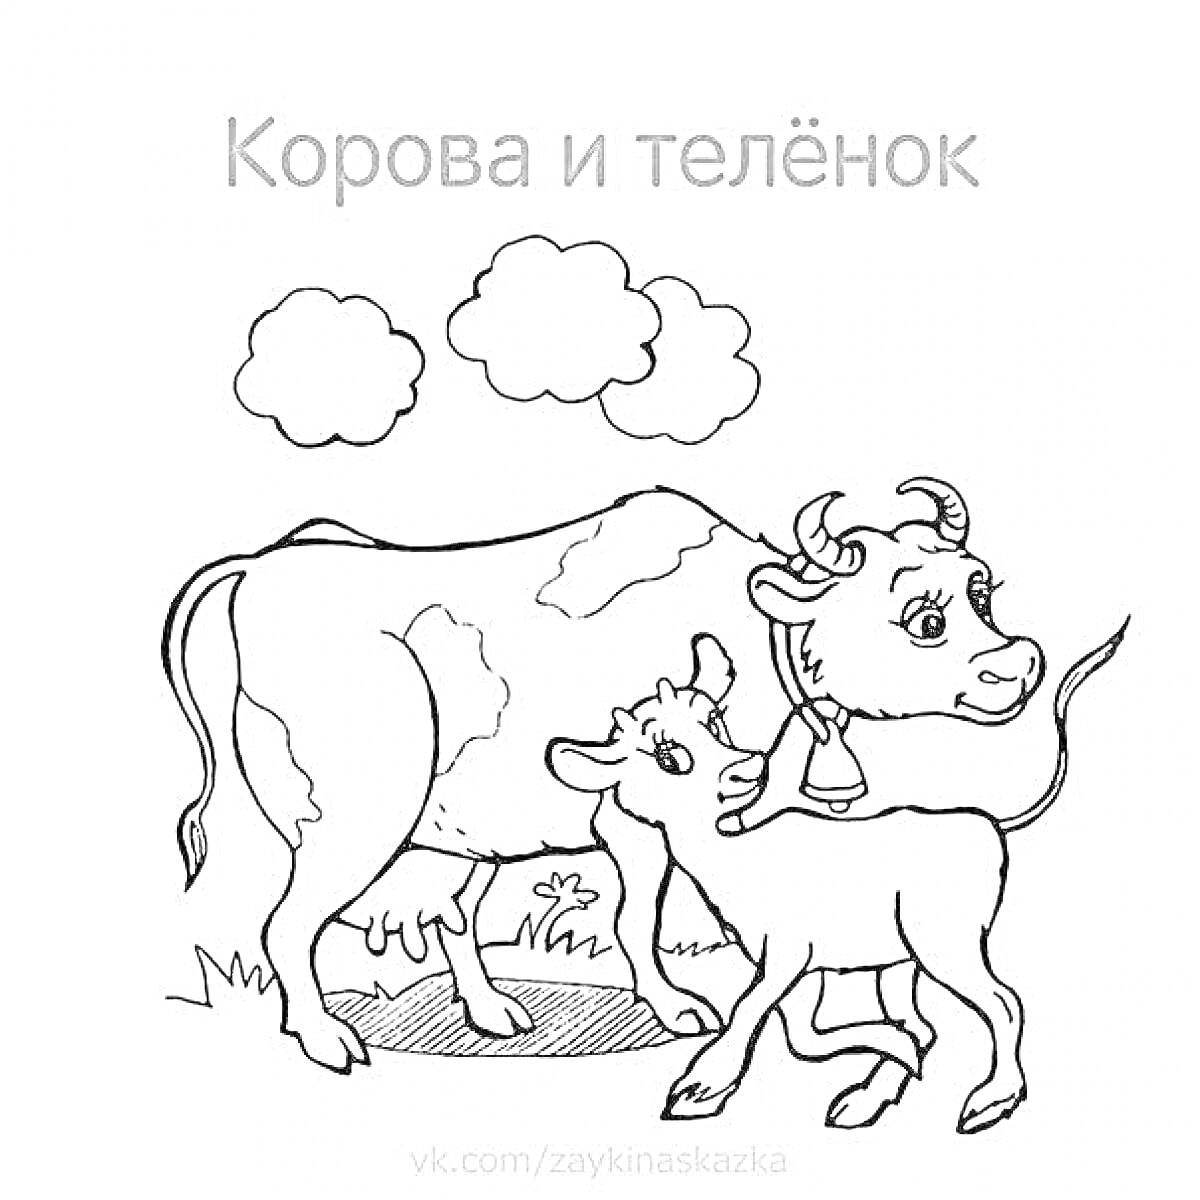 На раскраске изображено: Корова, Теленок, Облака, Трава, Животные